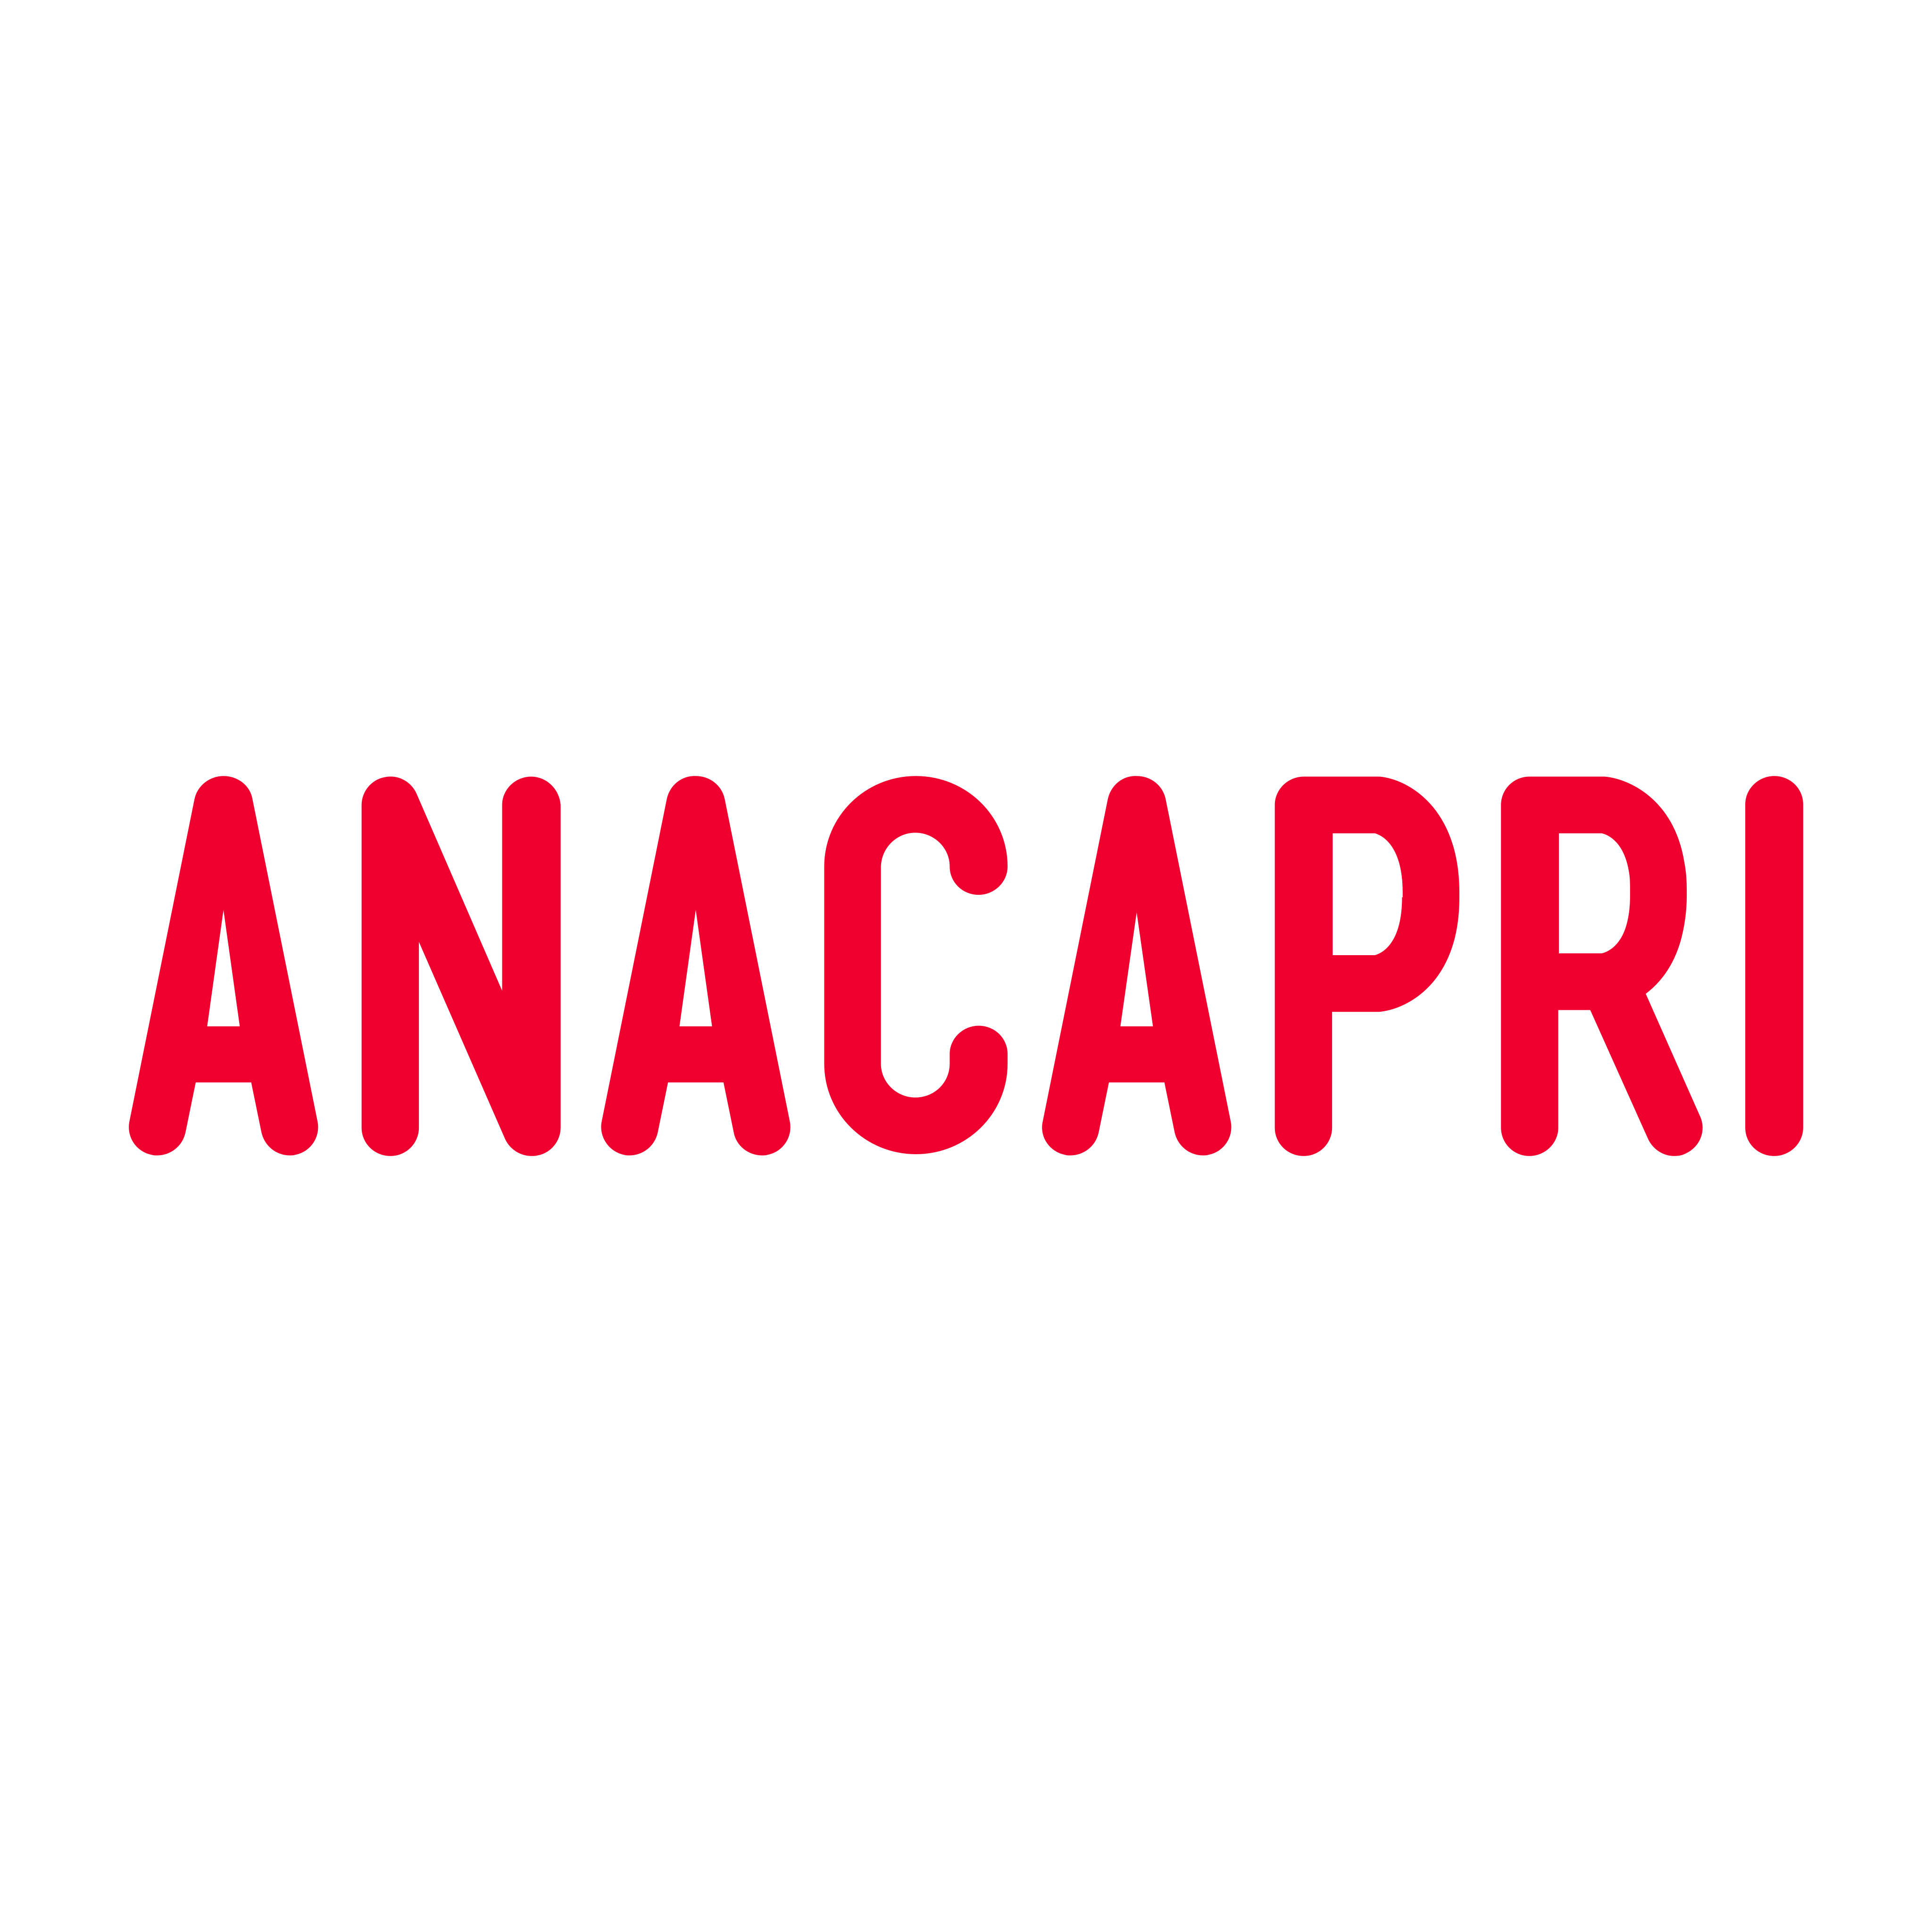 ANACAPRI Logo PNG.